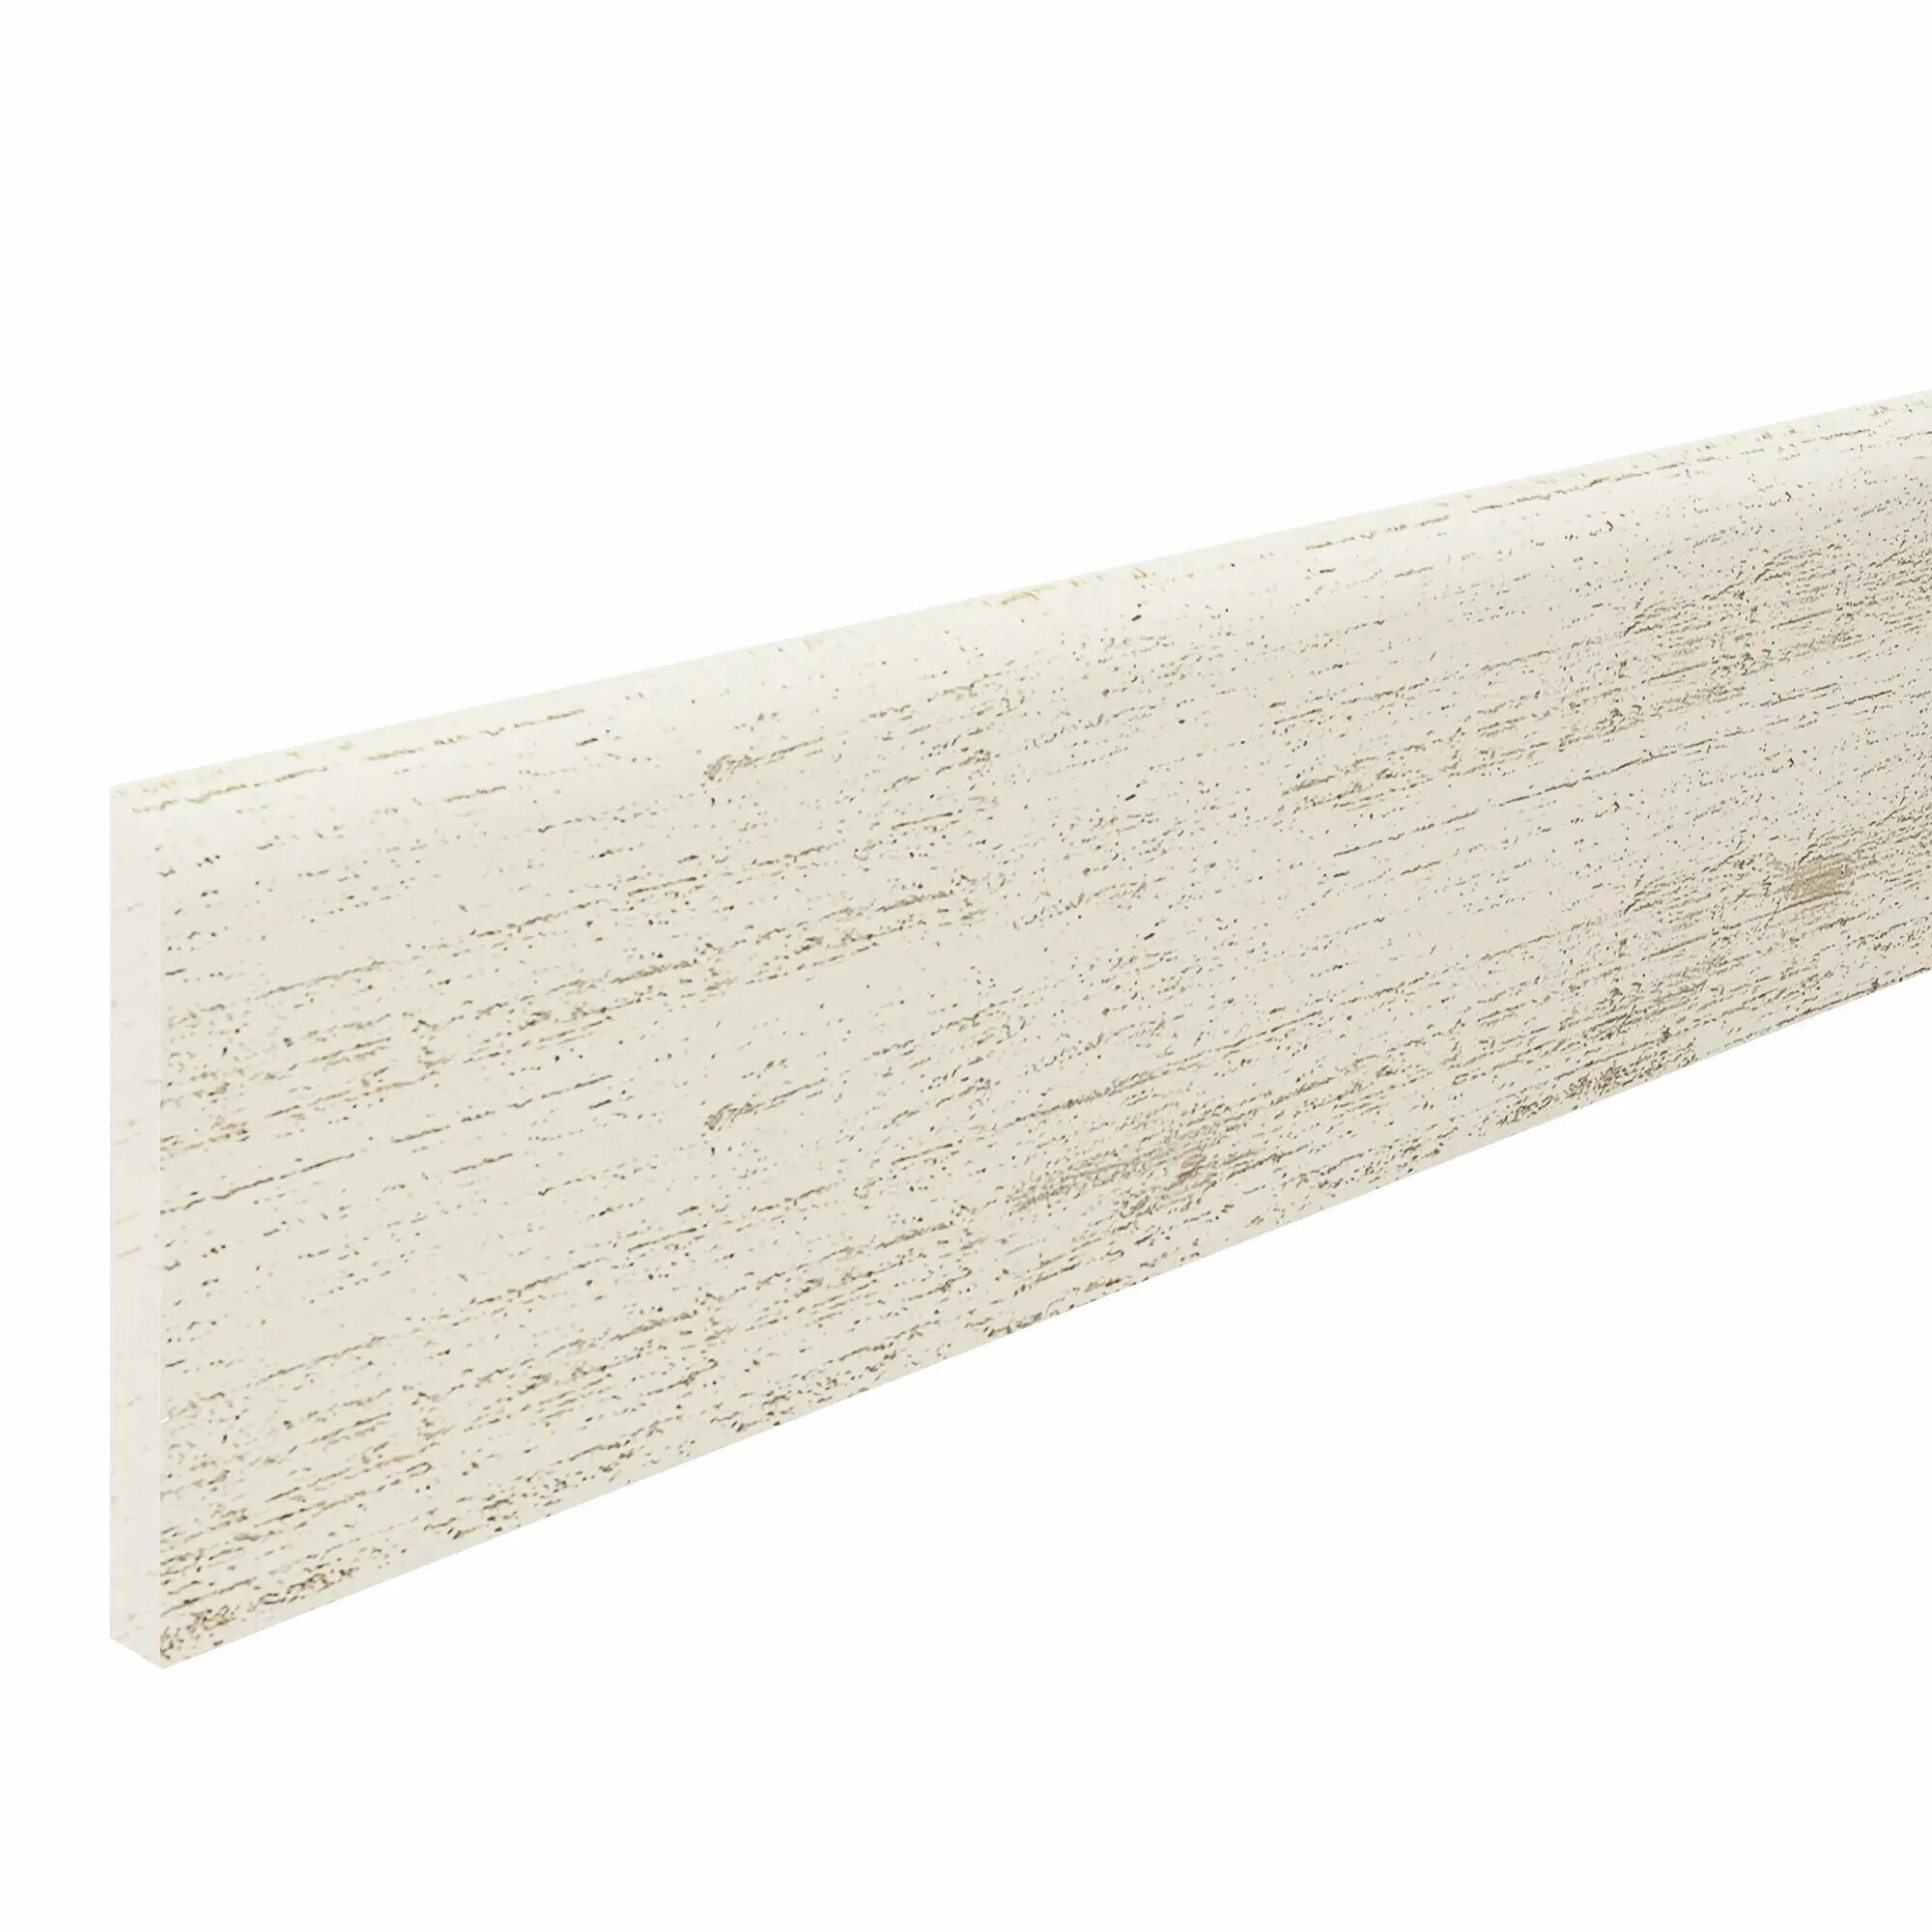 ARTENS Pack de 4 rodapiés recto artens madera 10x60 cm blanco